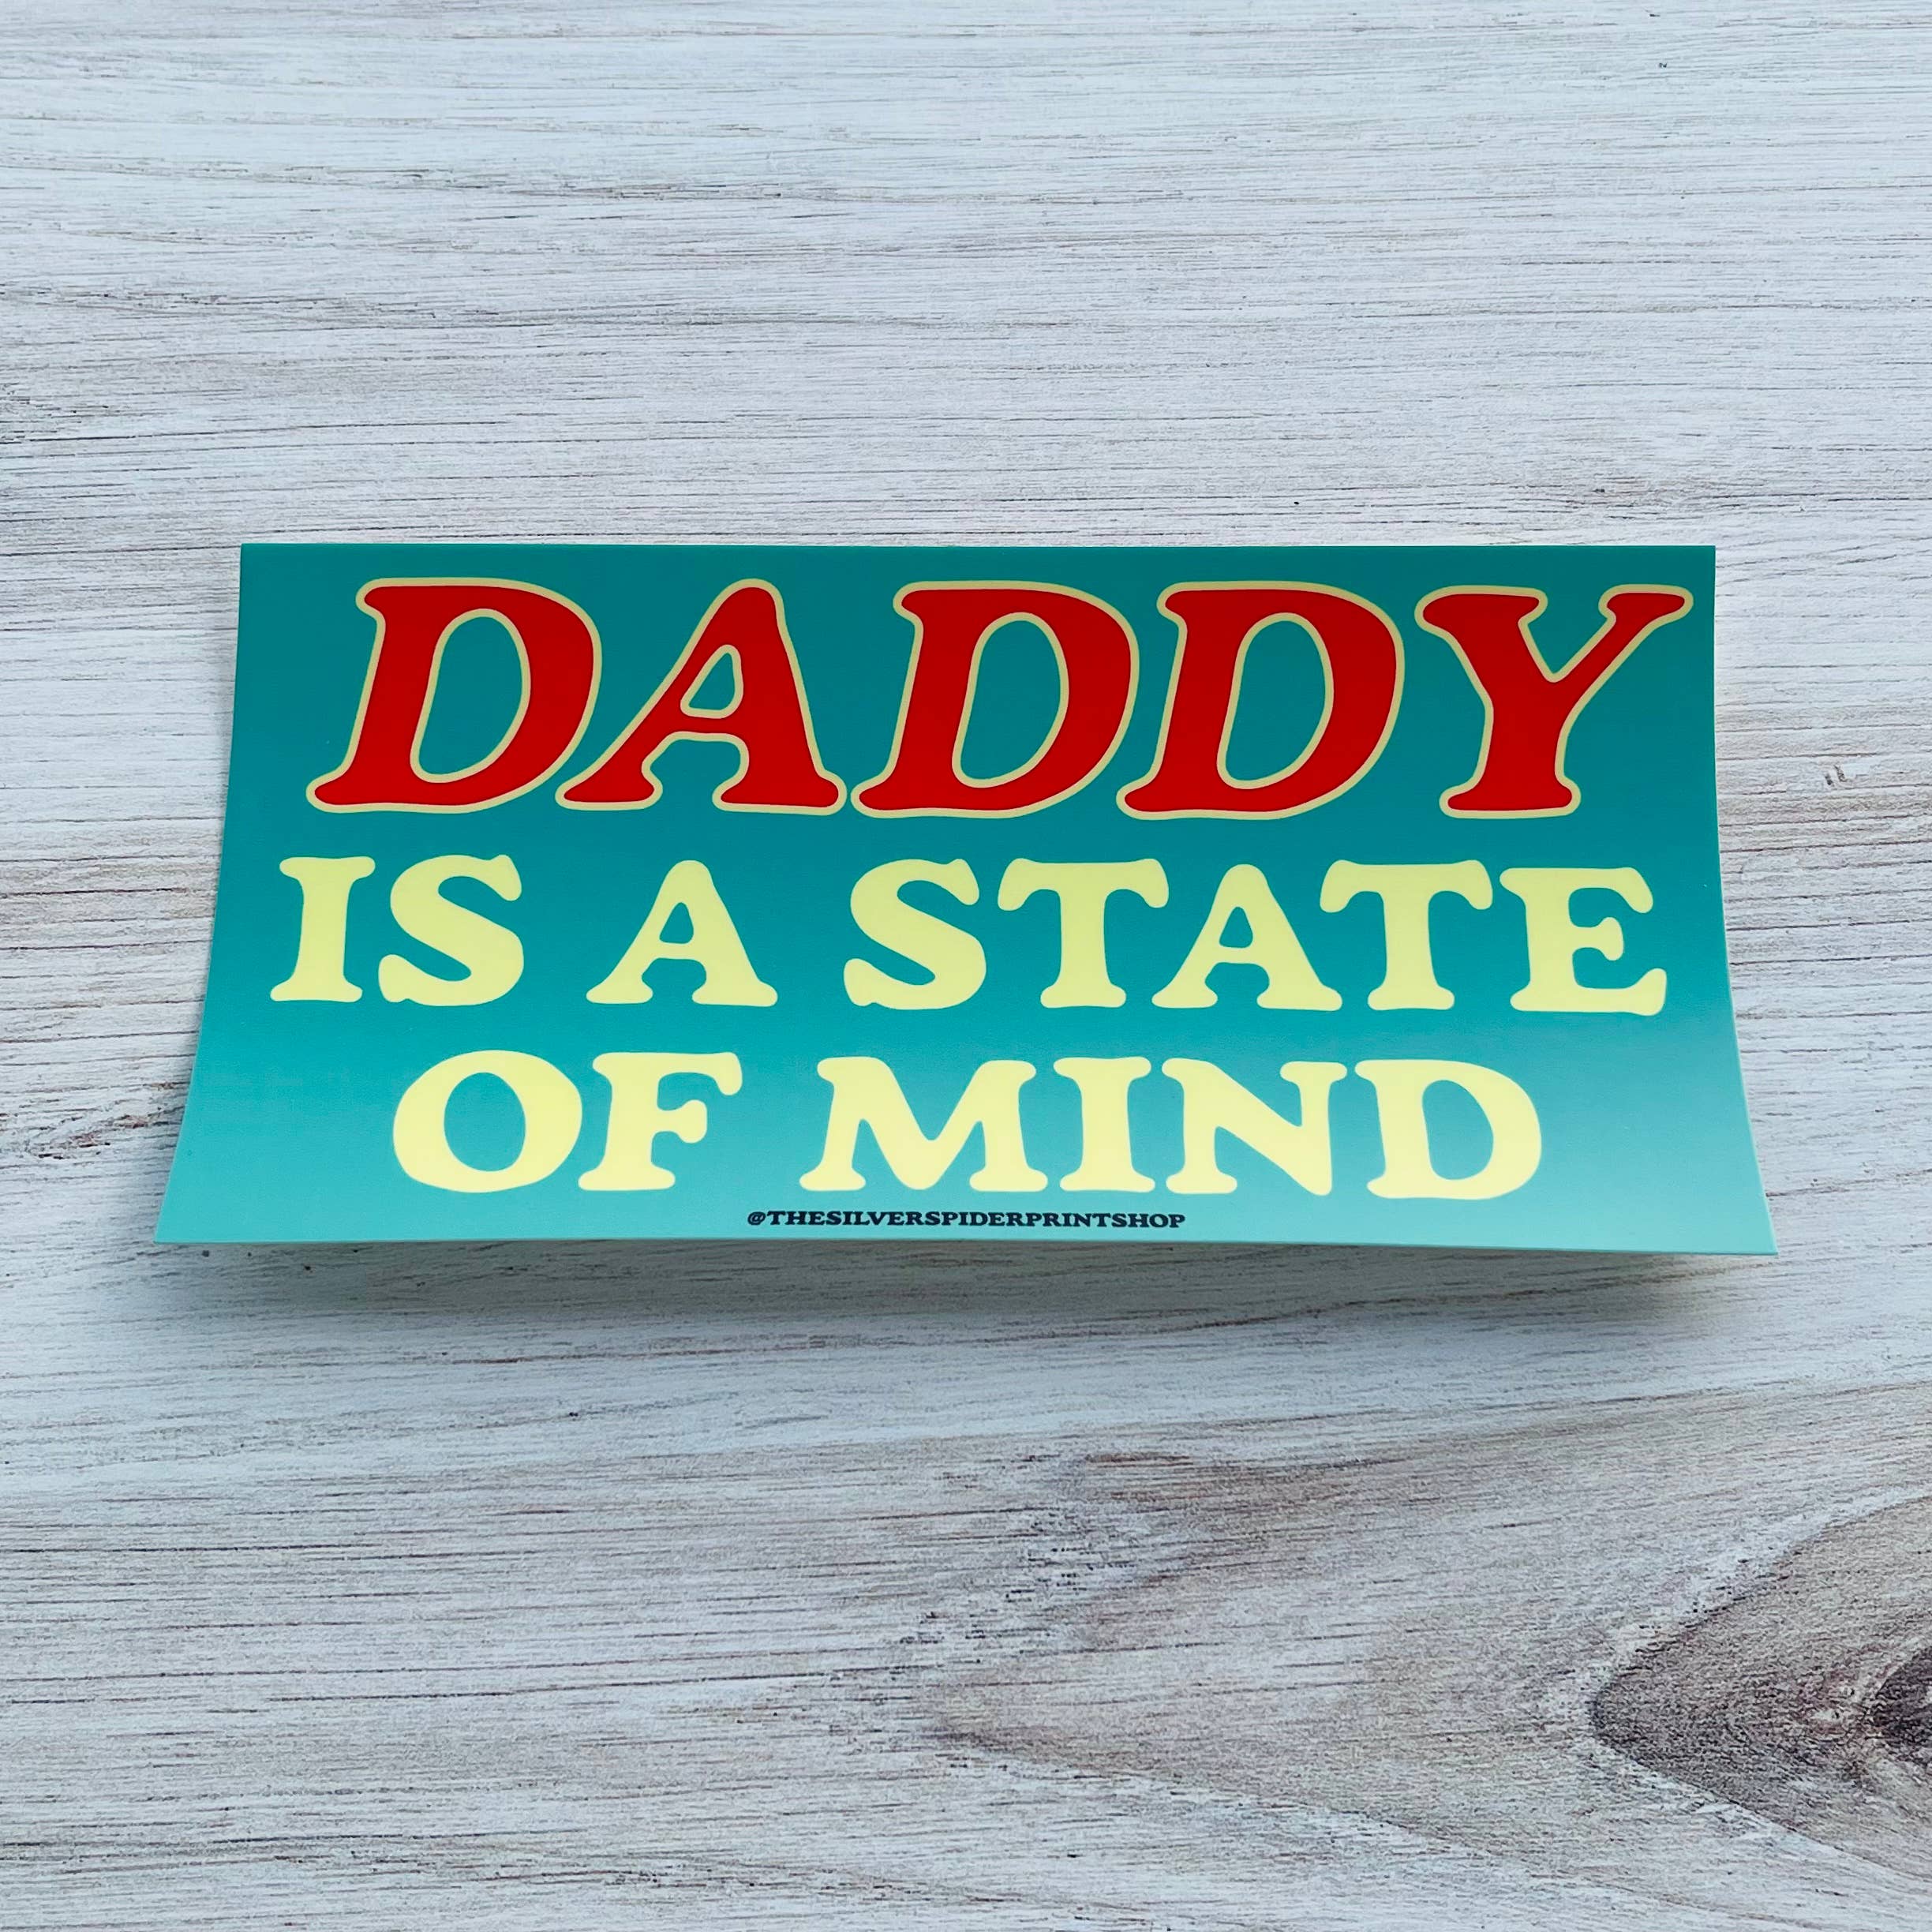 Daddy is a state of mind bumper sticker